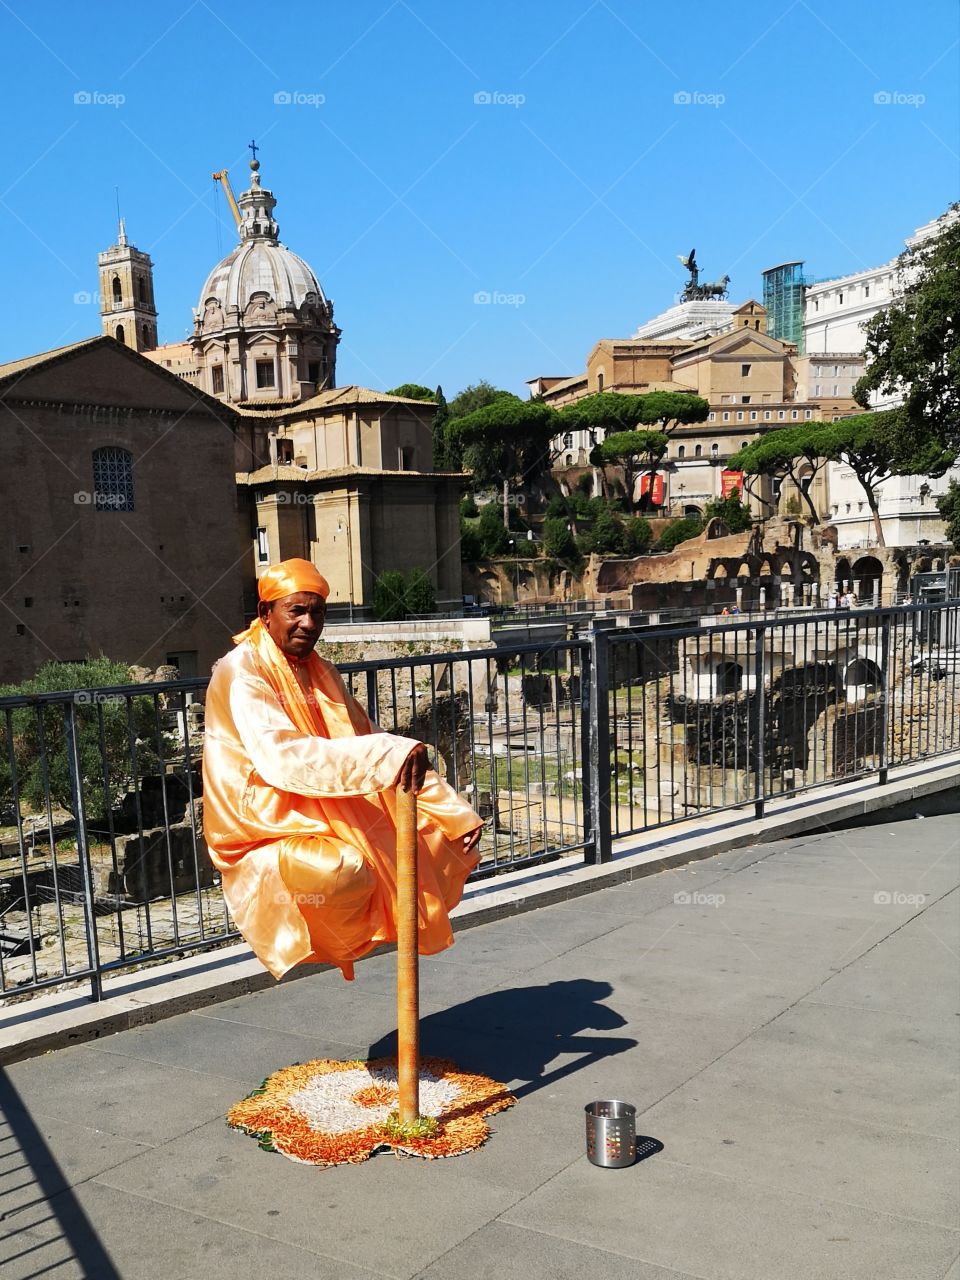 Fakir in Rome